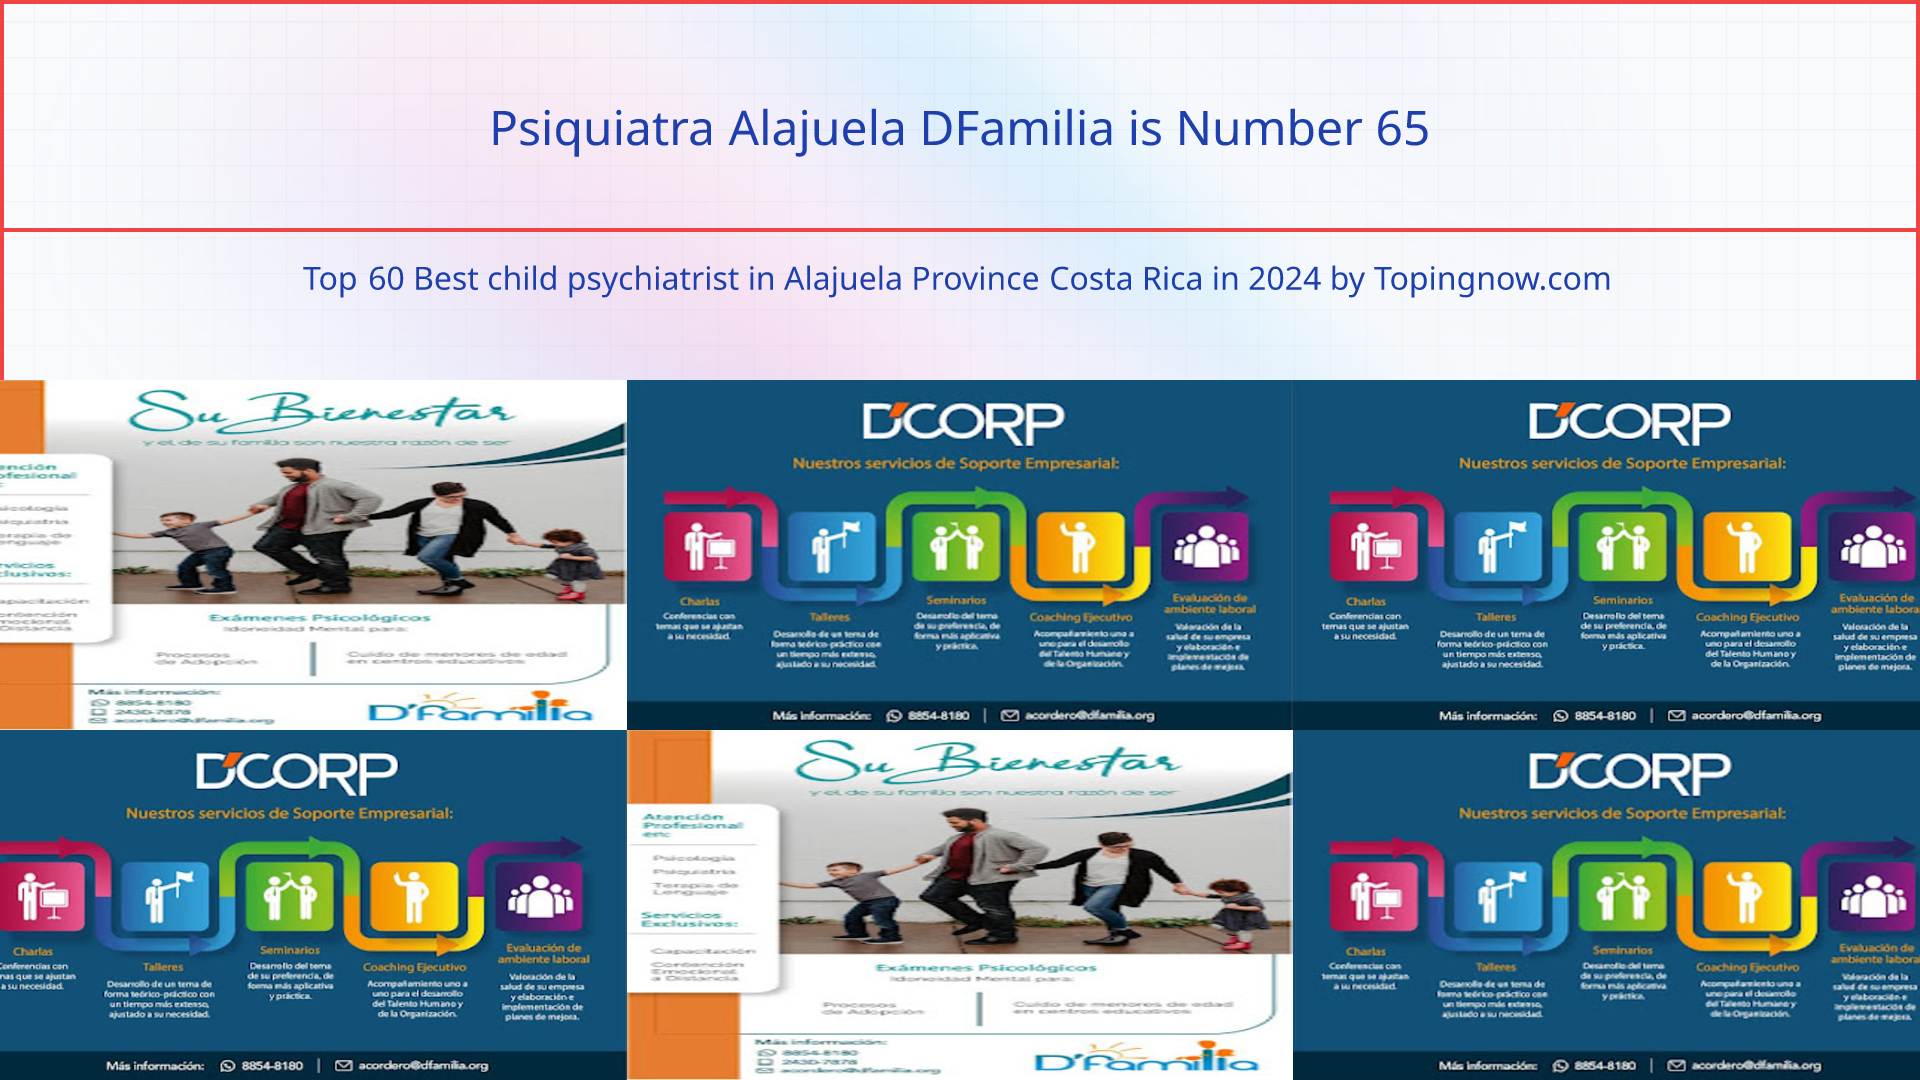 Psiquiatra Alajuela DFamilia: Top 60 Best child psychiatrist in Alajuela Province Costa Rica in 2024